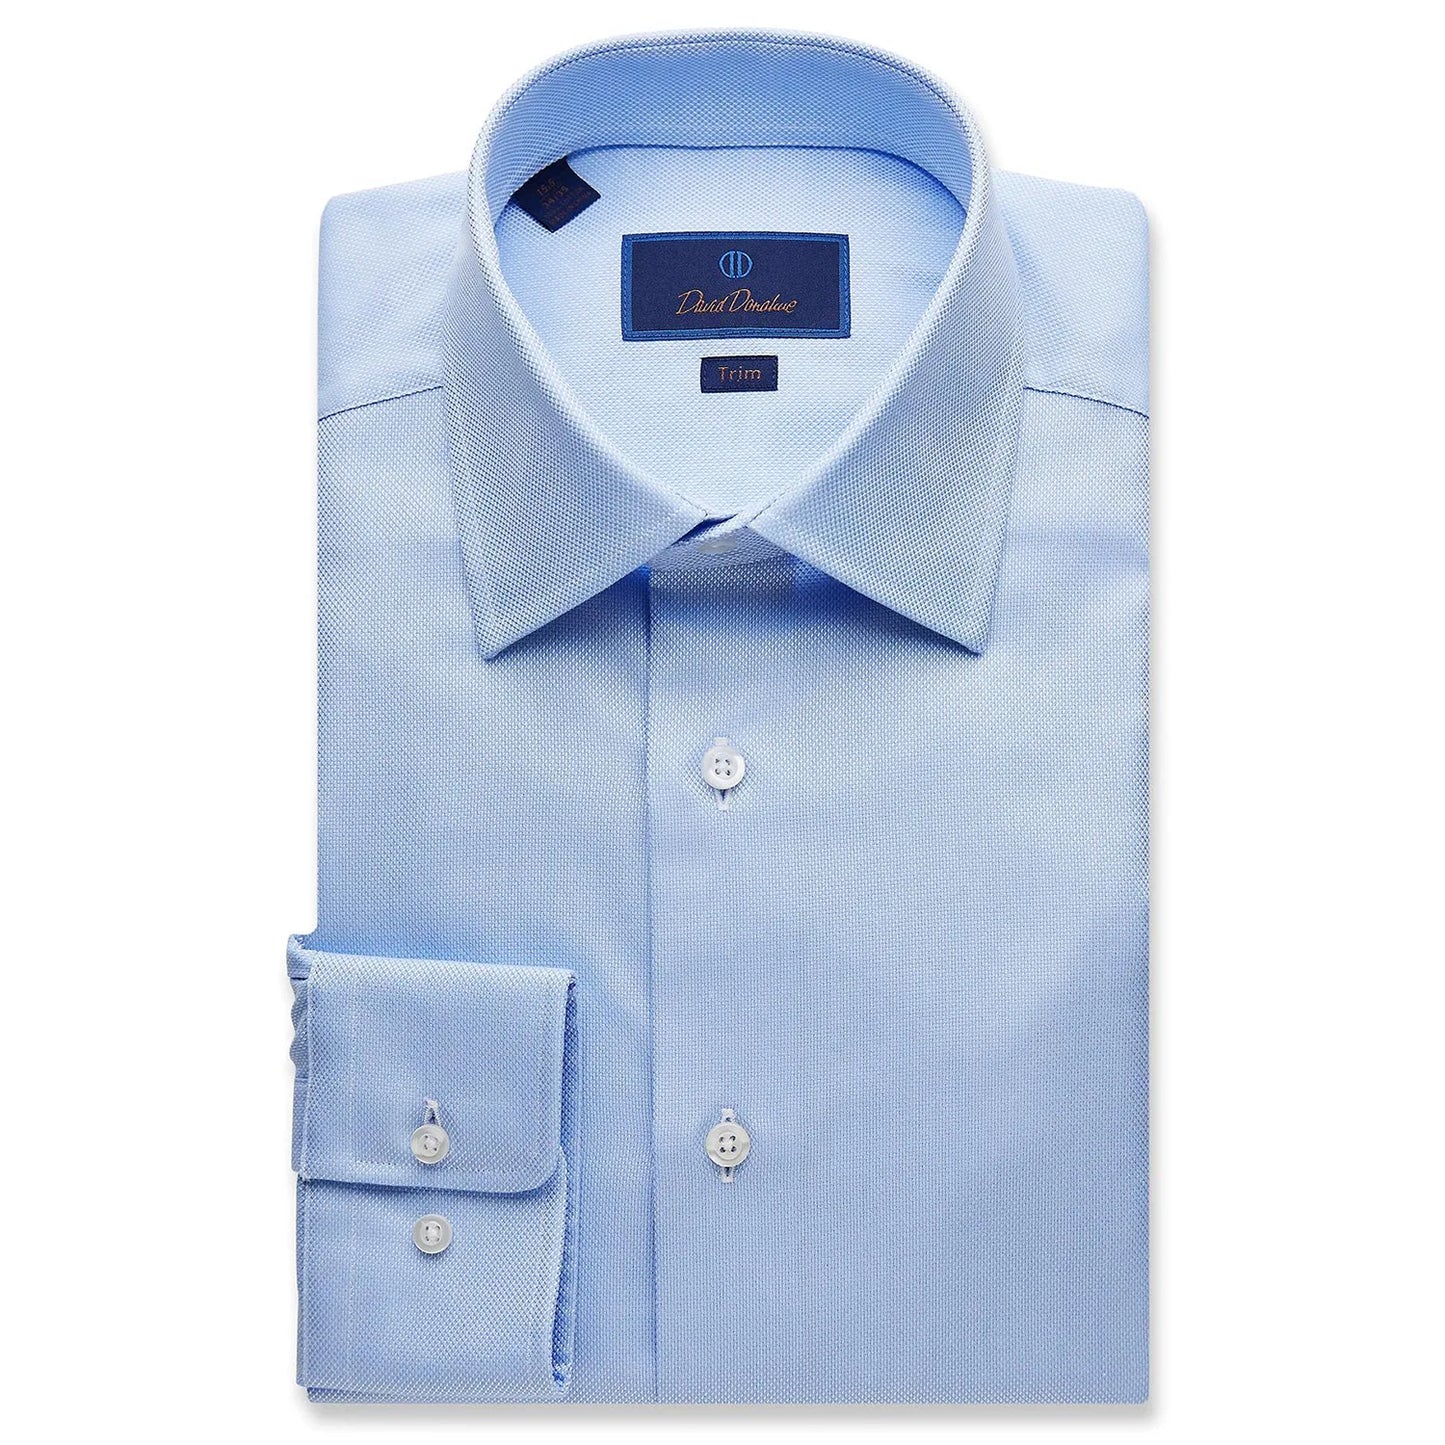 David Donahue Dress Shirt - Royal Oxford (2 Colors) (Trim)